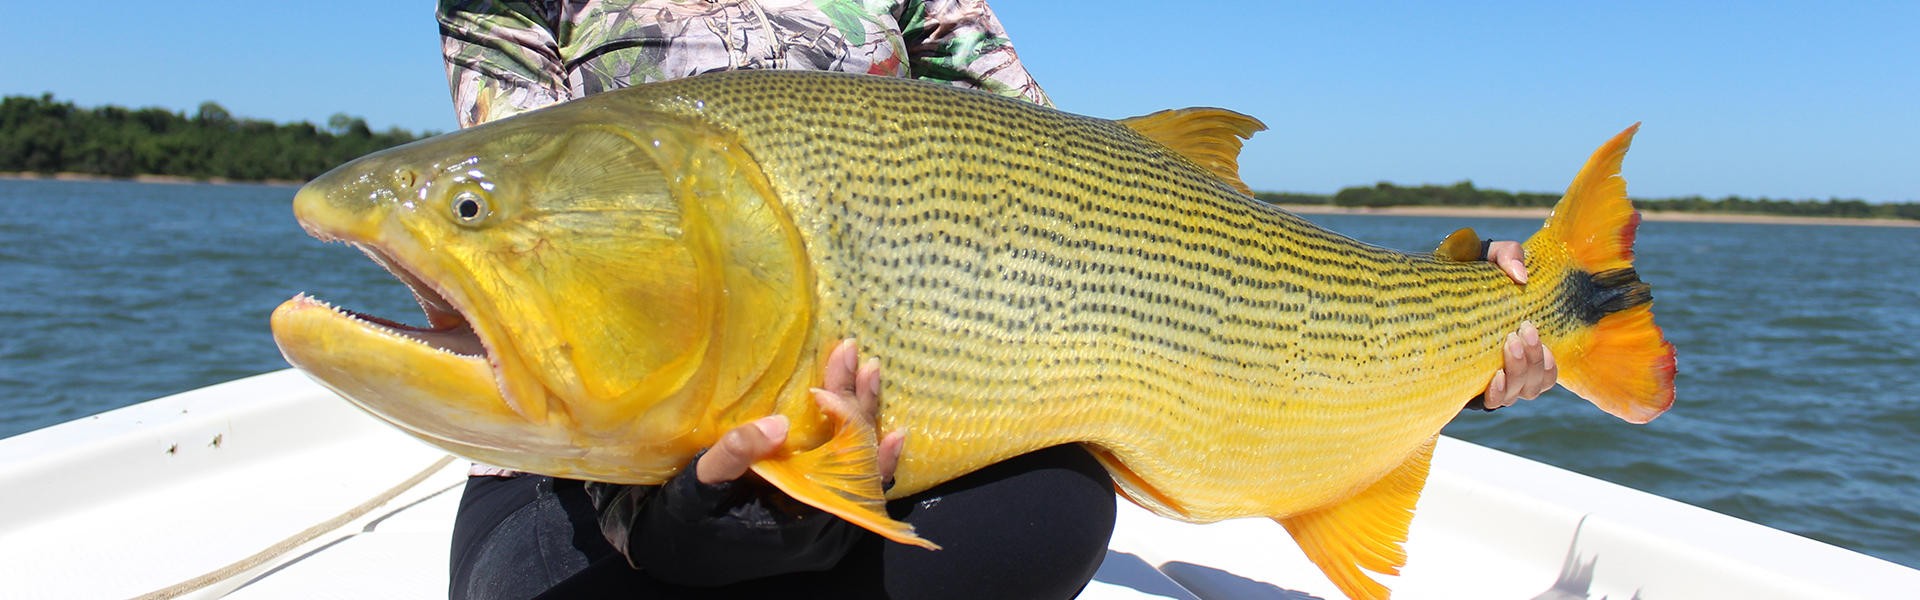 Dourados gigantes: pesca esportiva na Argentina